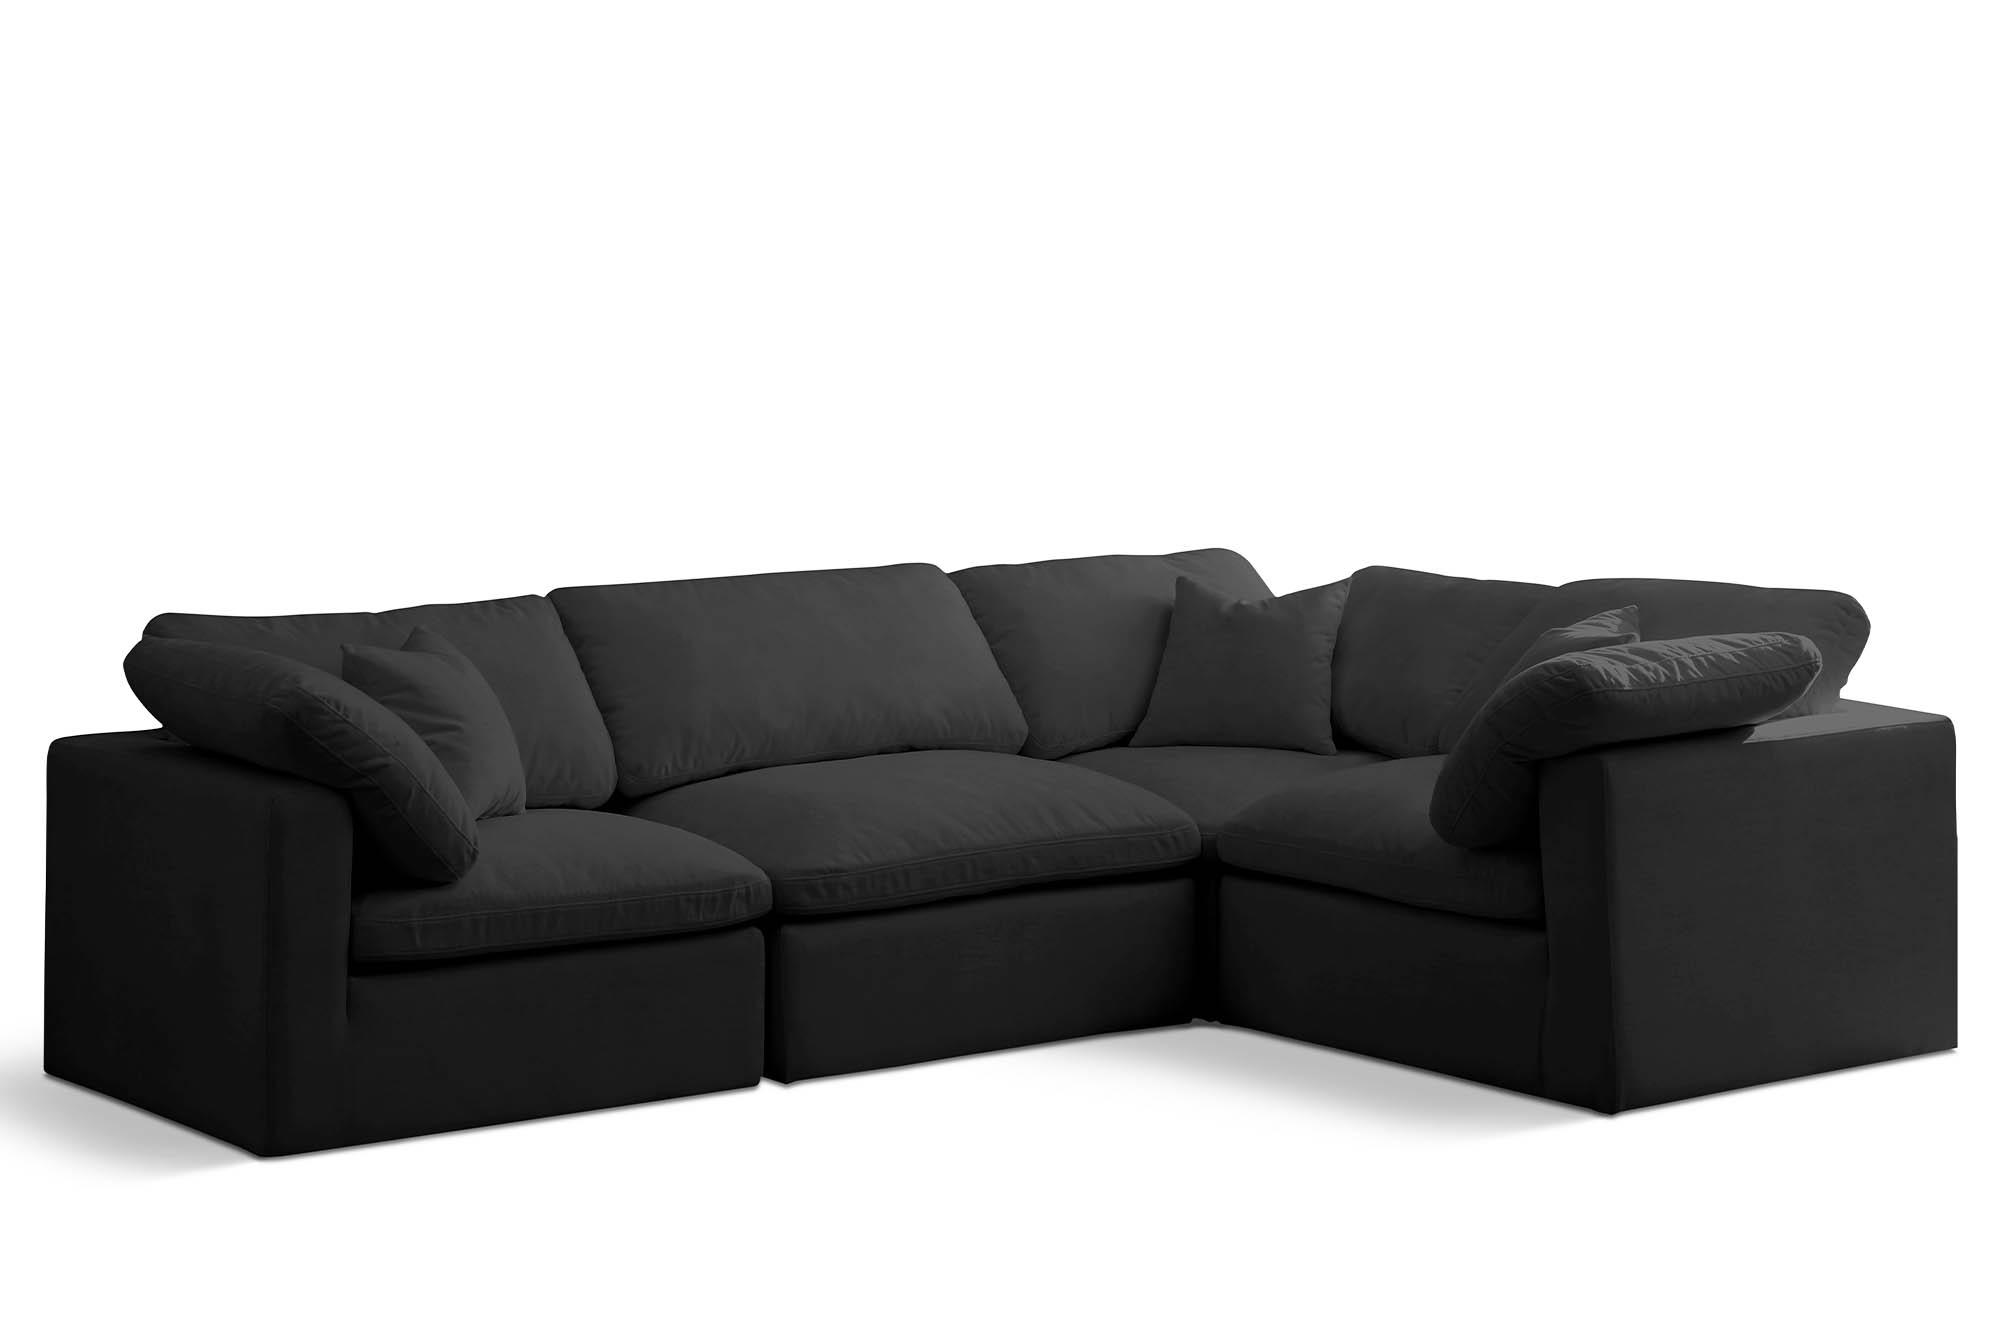 Contemporary, Modern Modular Sectional Sofa 602Black-Sec4C 602Black-Sec4C in Black Fabric